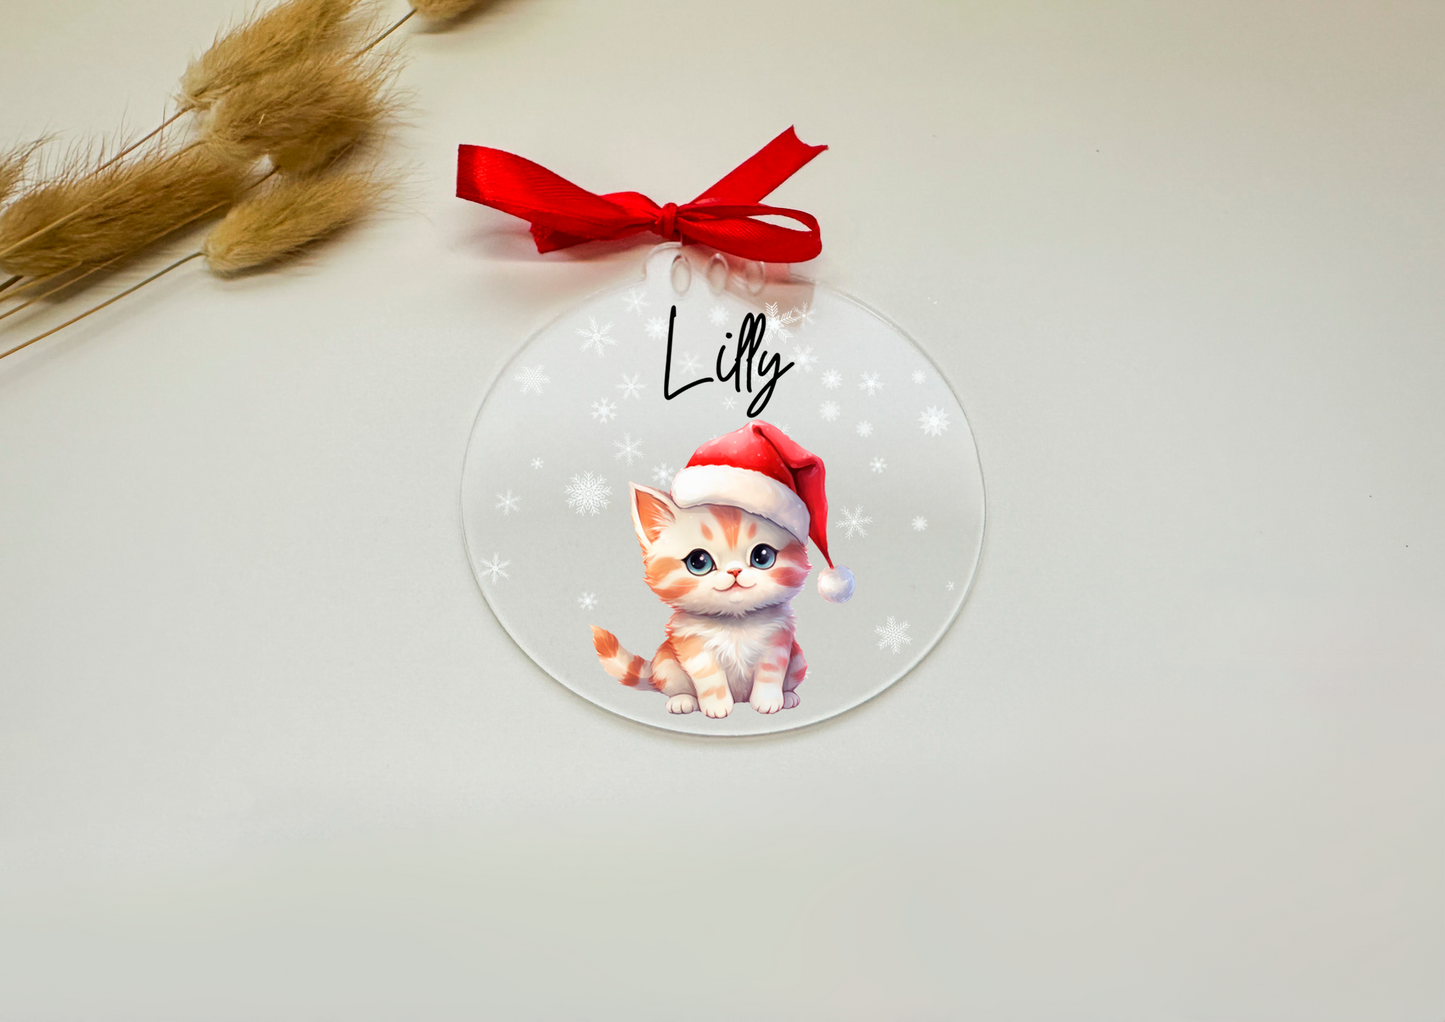 Boules de sapin de Noël en acrylique/personnalisées/Boules de sapin de Noël/Boules de Noël personnalisées